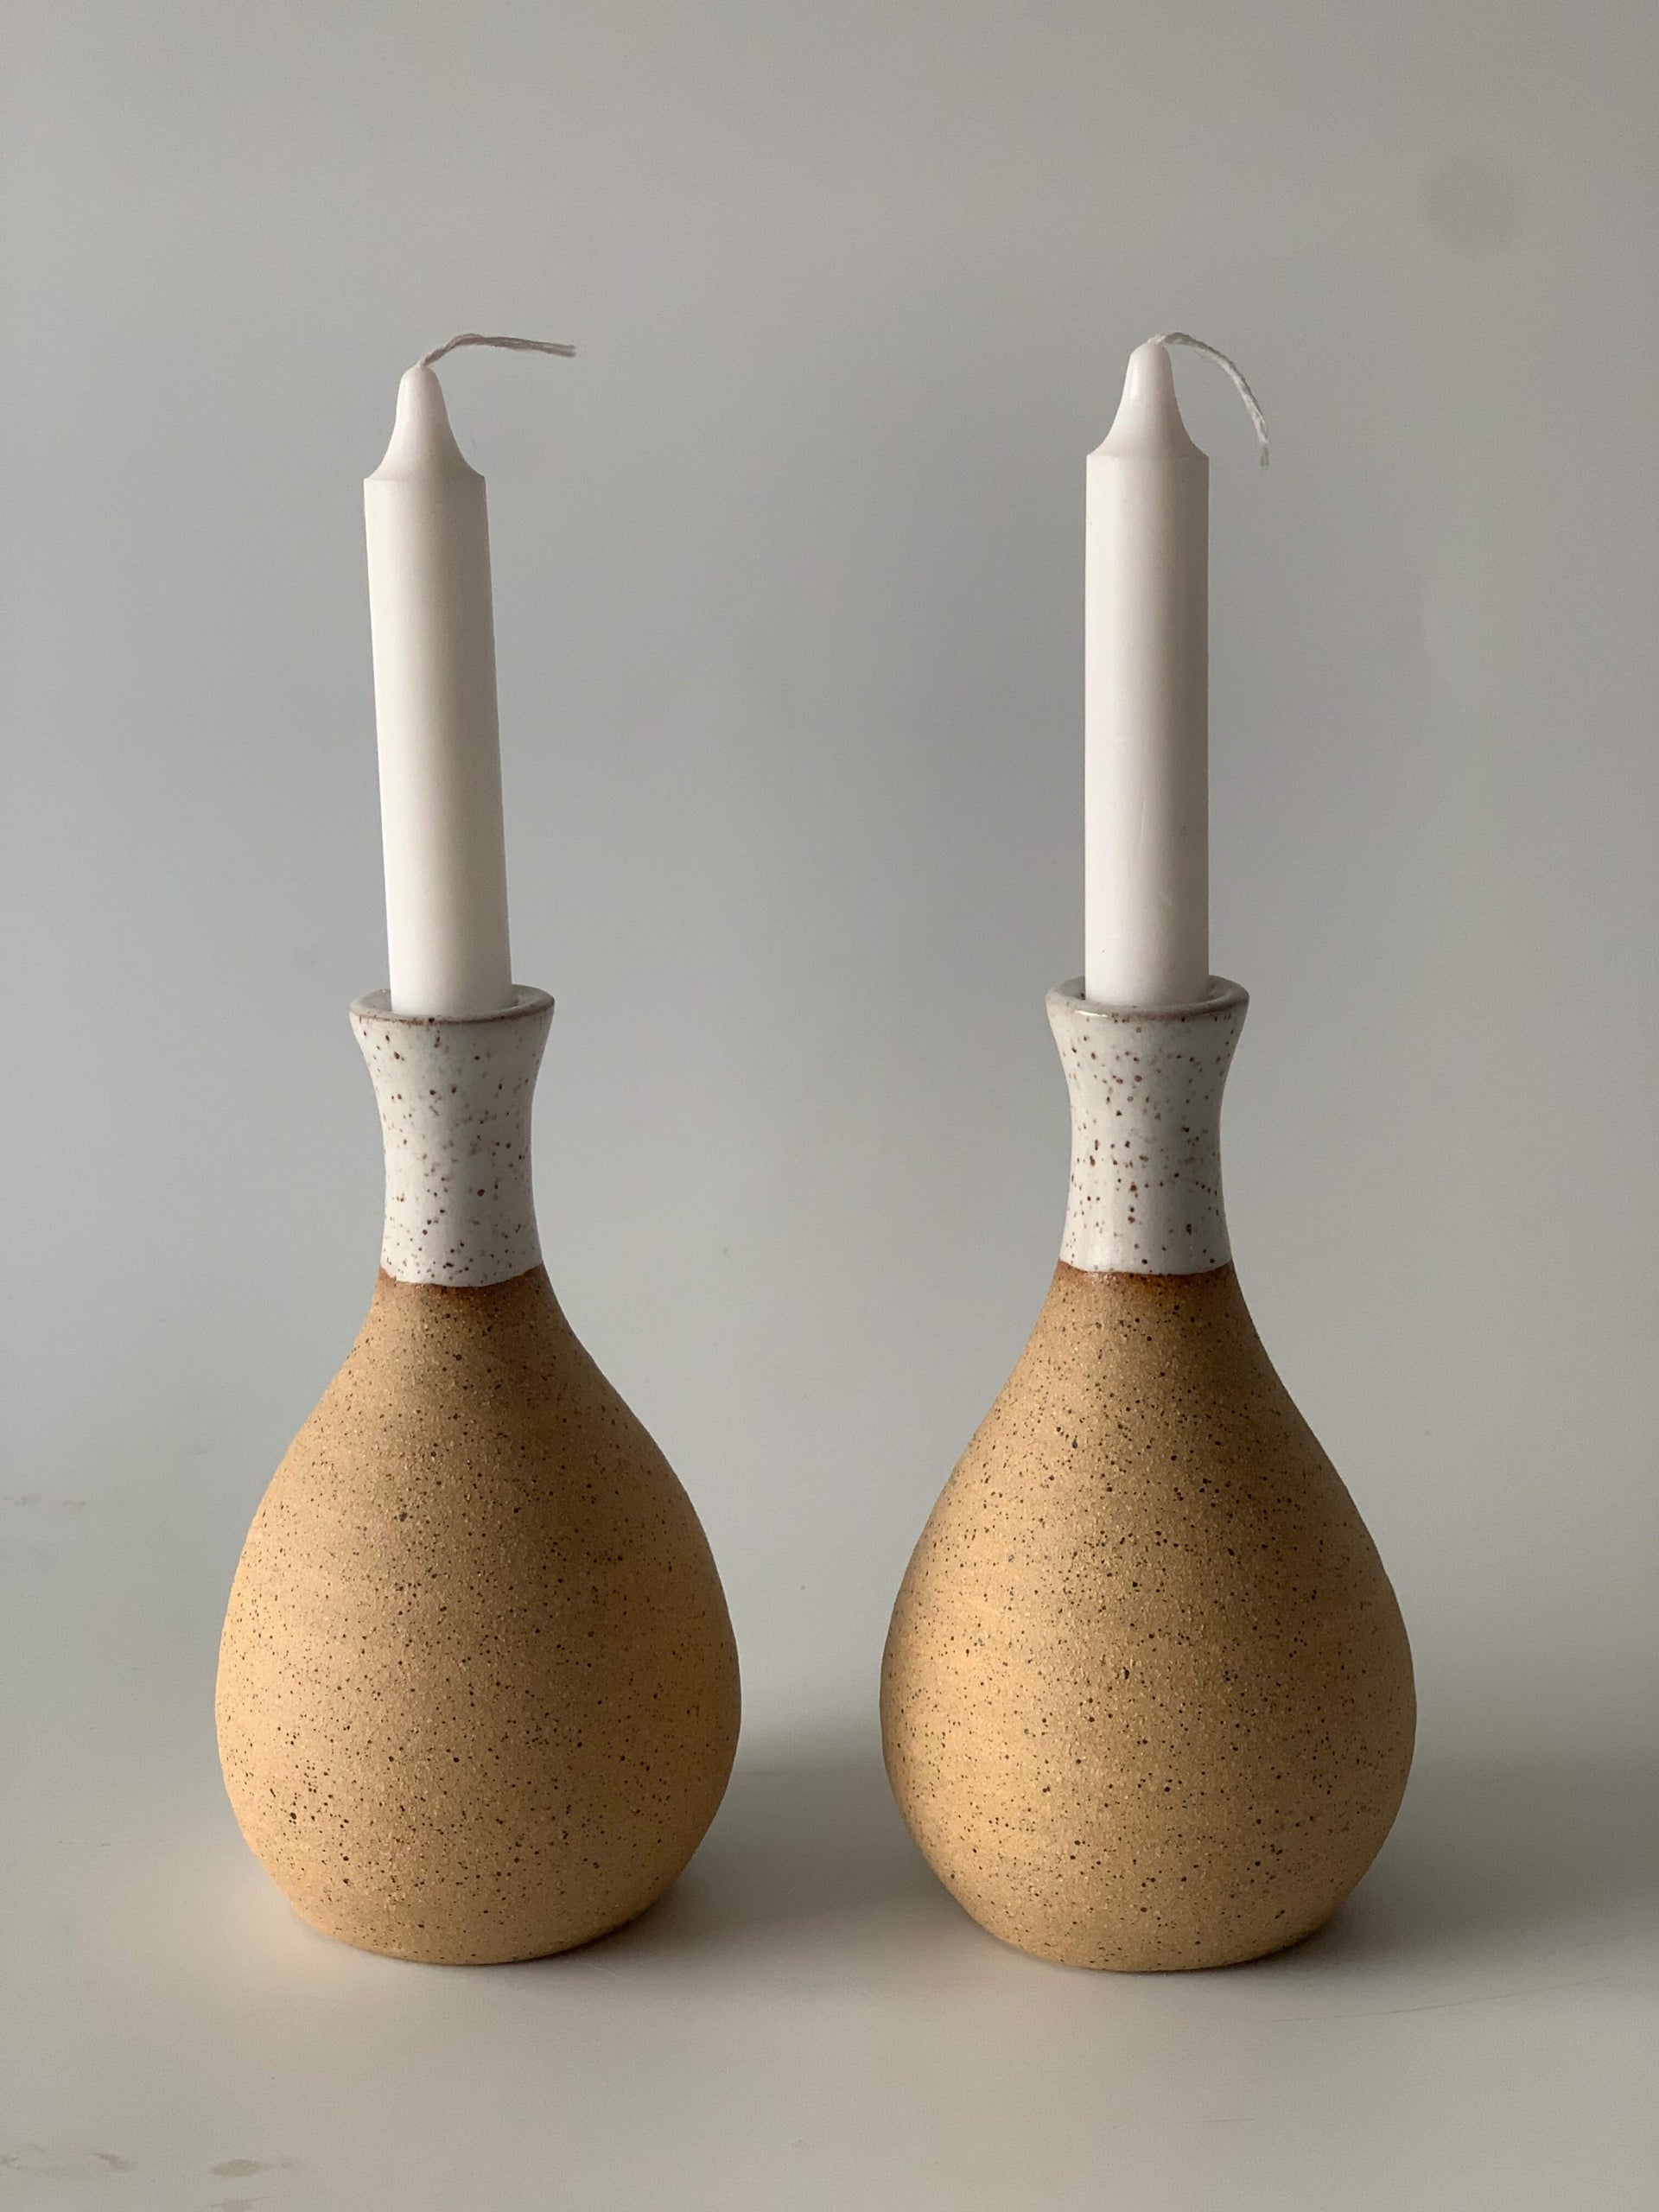 Rachael Pots Candlesticks Ceramic Shabbat Candlesticks by Rachael Pots - Nude and White